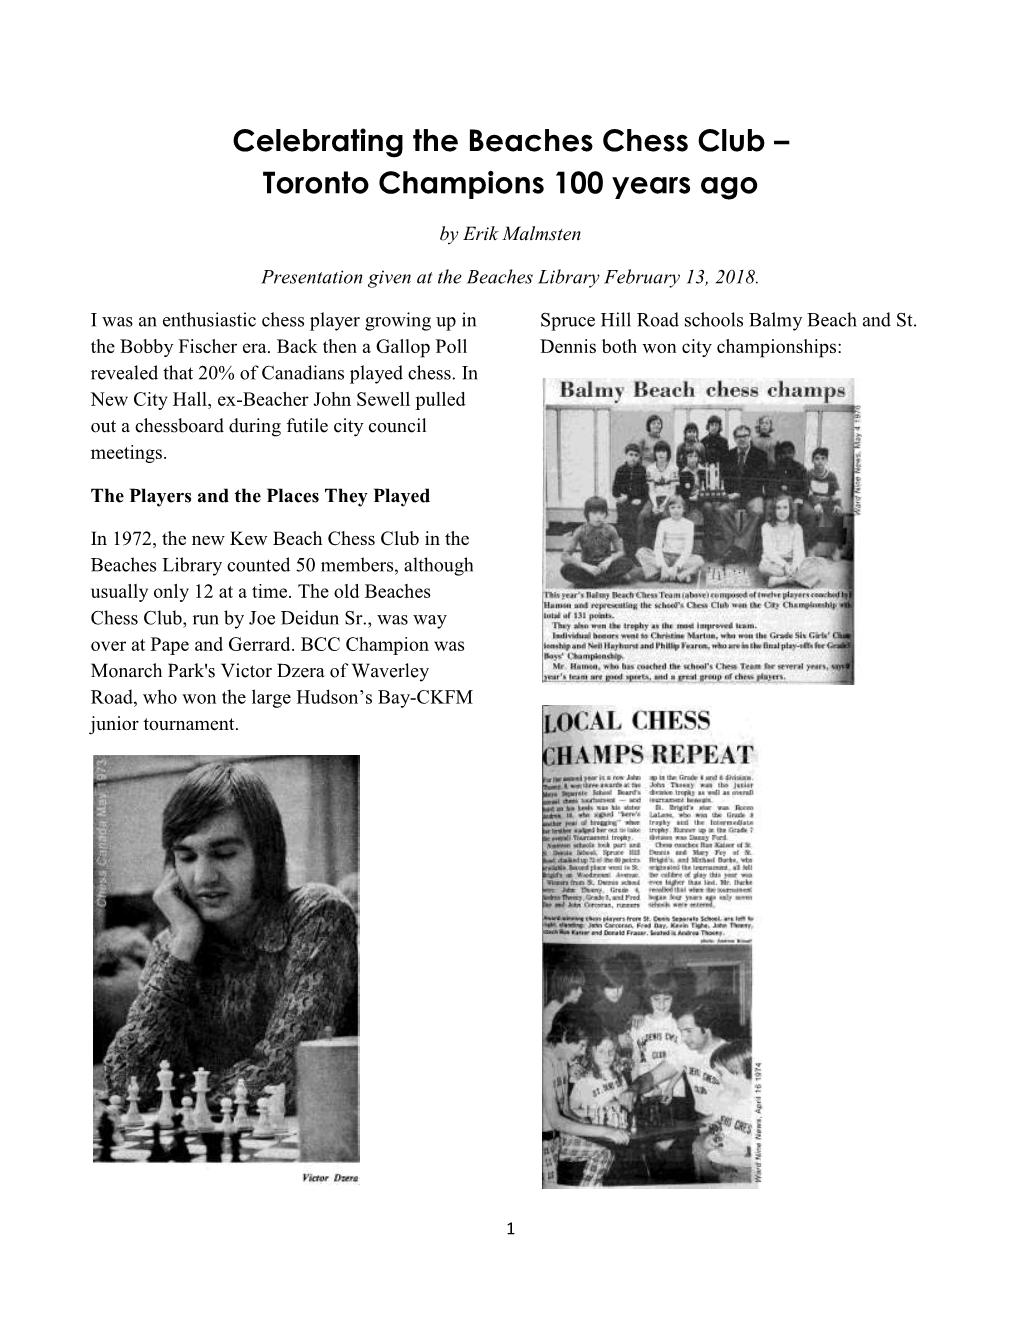 Celebrating the Beaches Chess Club – Toronto Champions 100 Years Ago